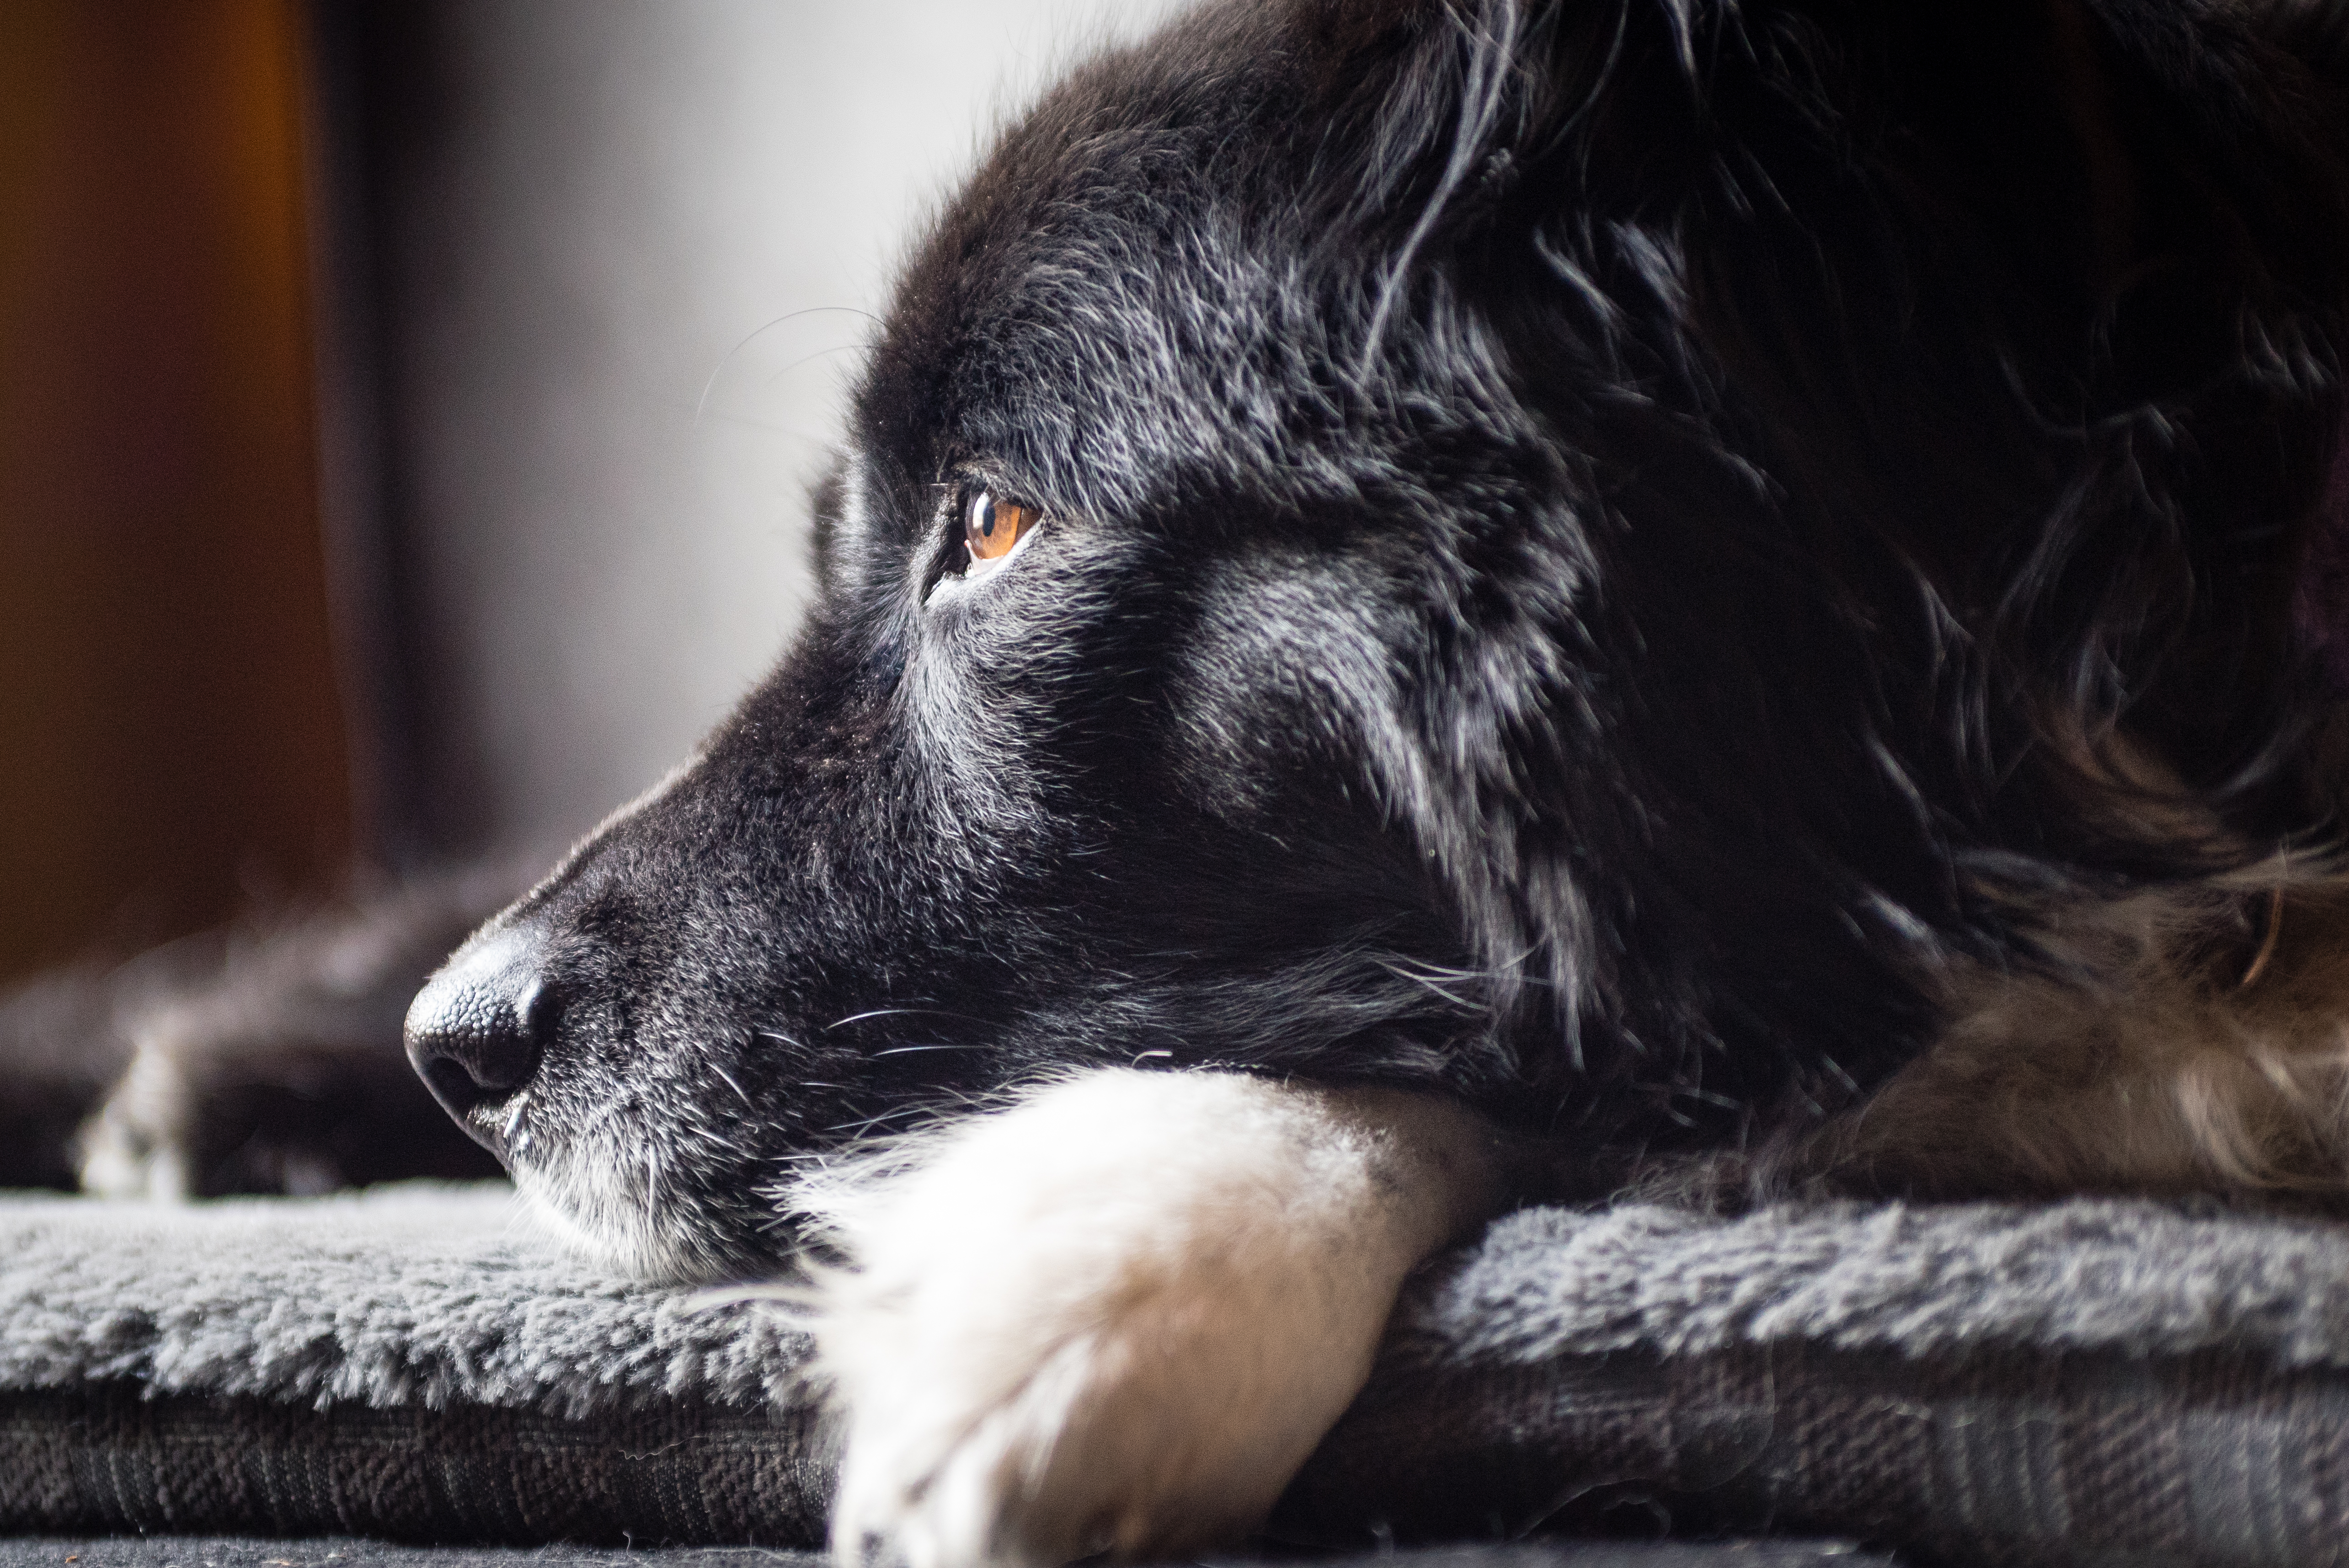 Border collie profile of dog resting.